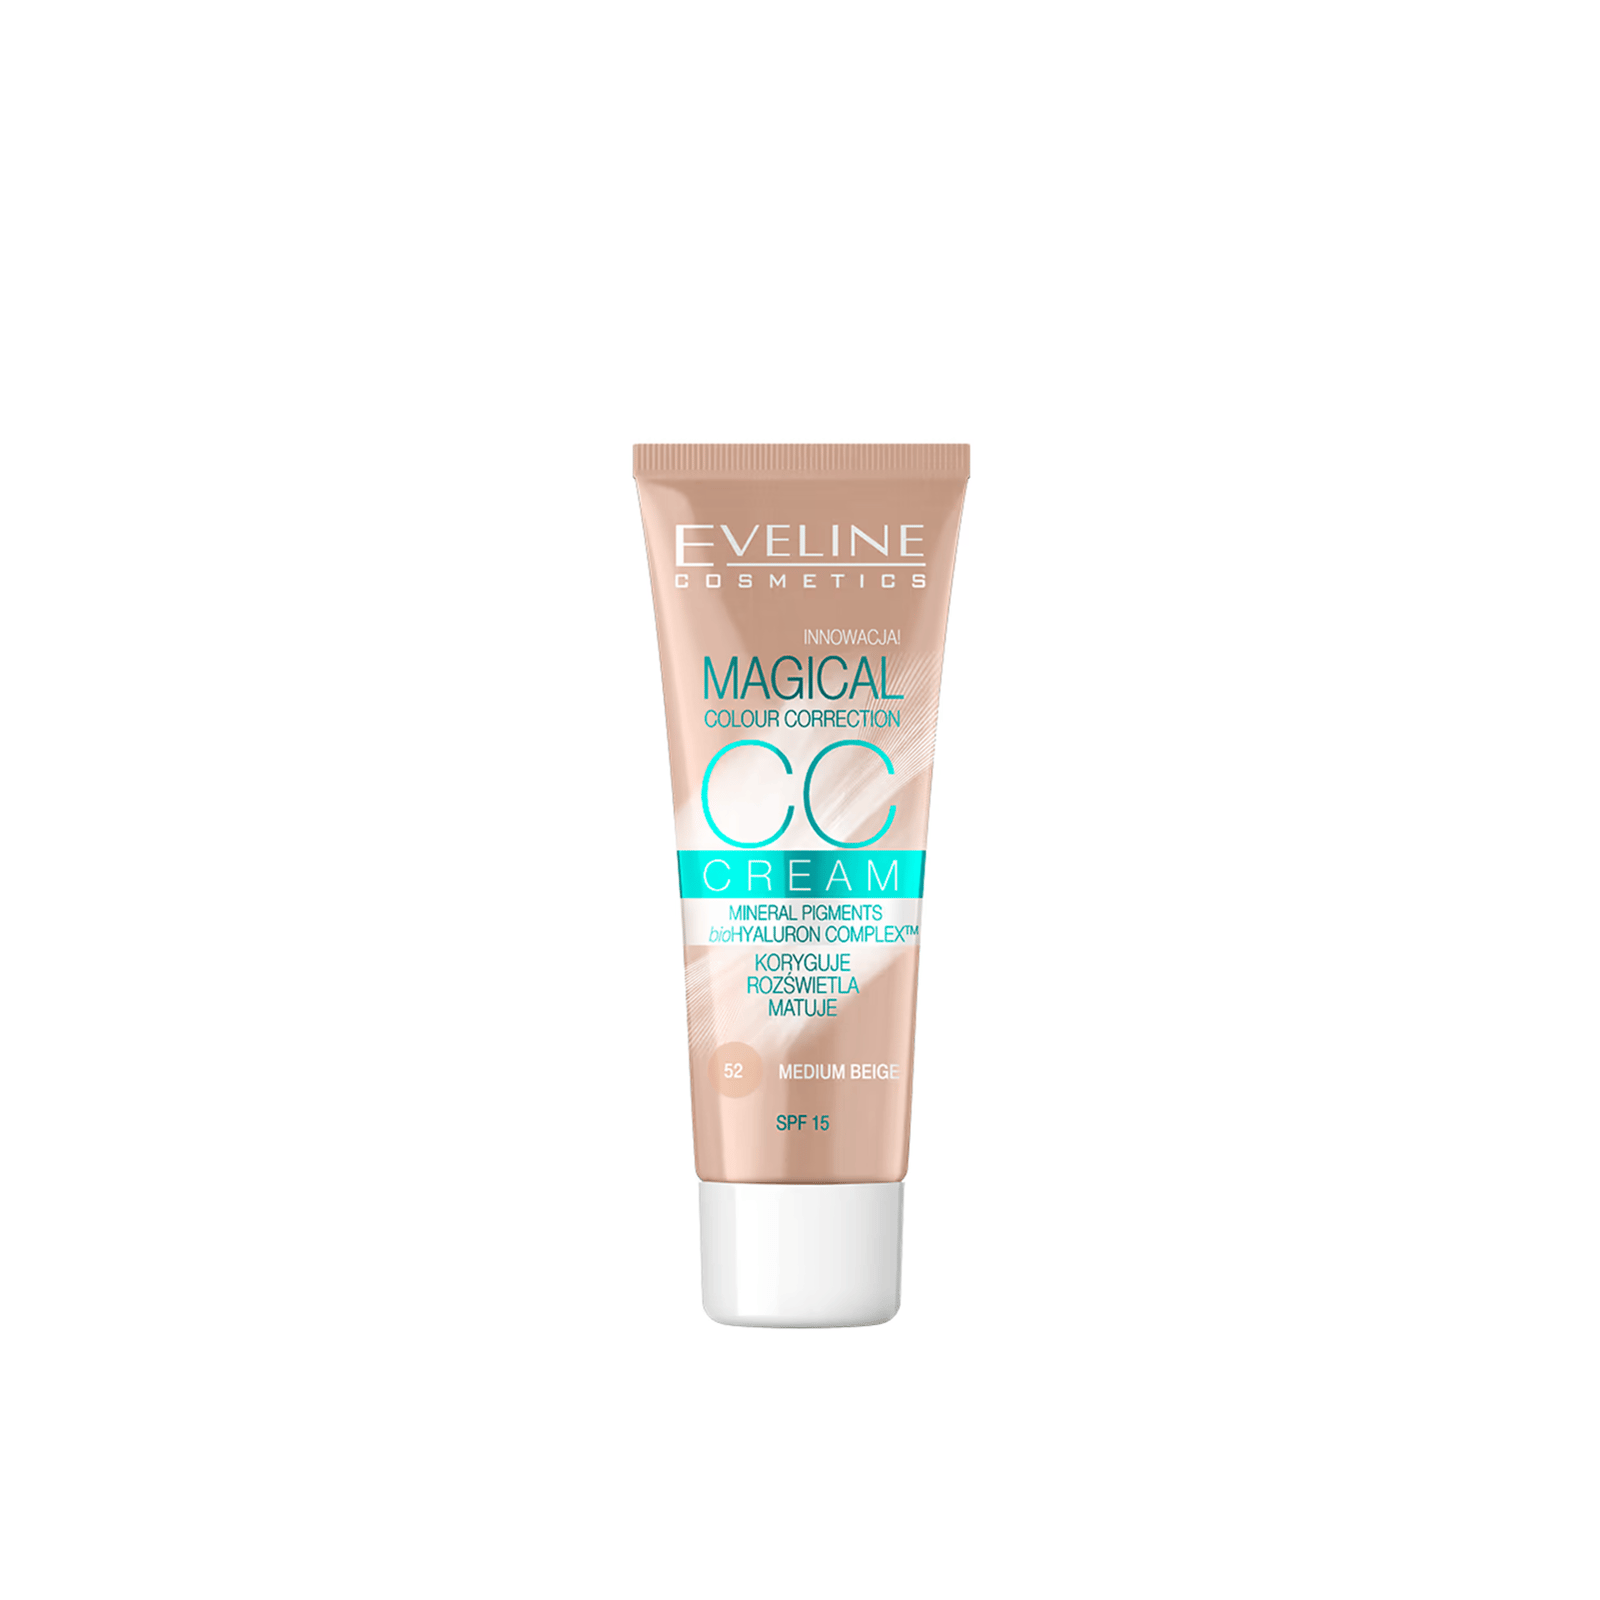 Eveline Cosmetics Magical Colour Correction CC Cream SPF15 52 Medium Beige 30ml (1.06 fl oz)